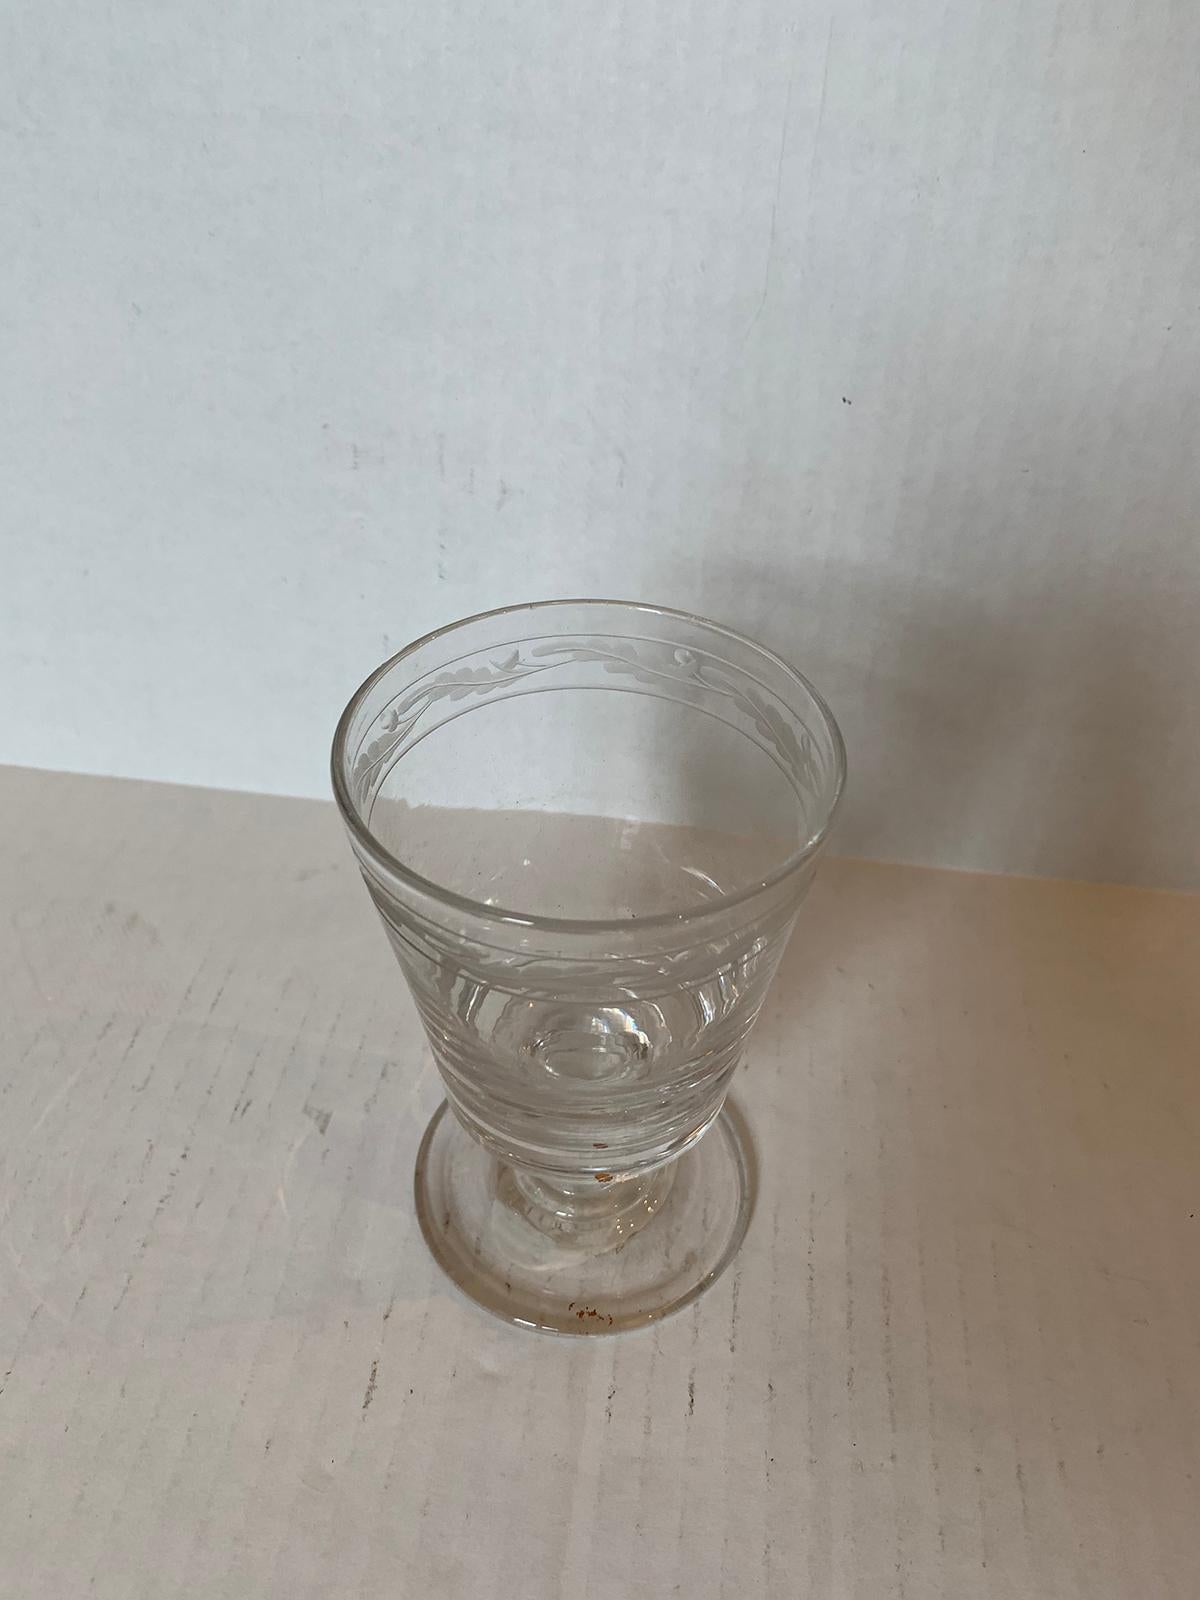 19th century glassware